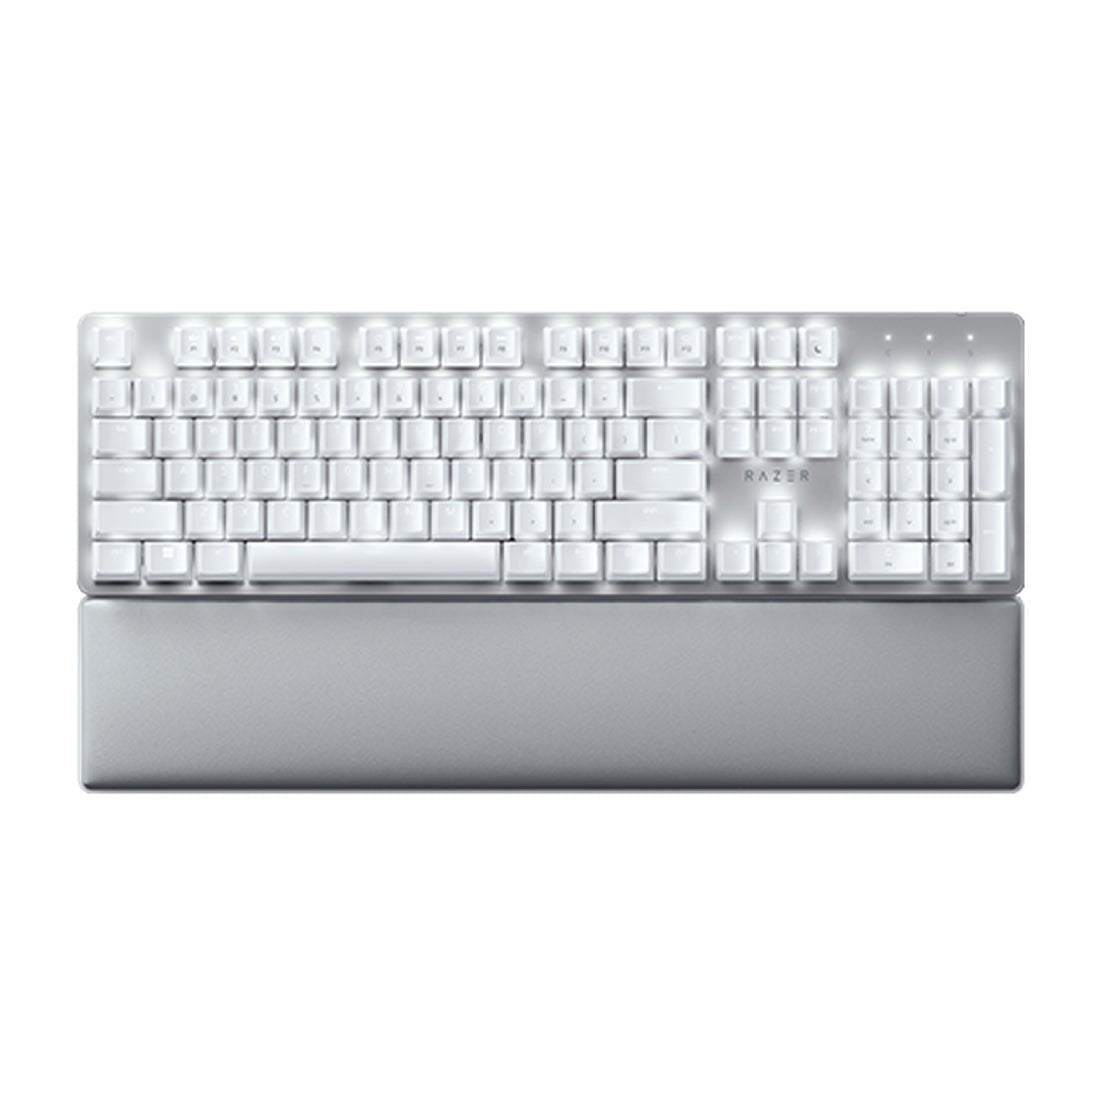 Razer Pro Type Ultra US Wireless Mechanical Gaming Keyboard - White - Store 974 | ستور ٩٧٤